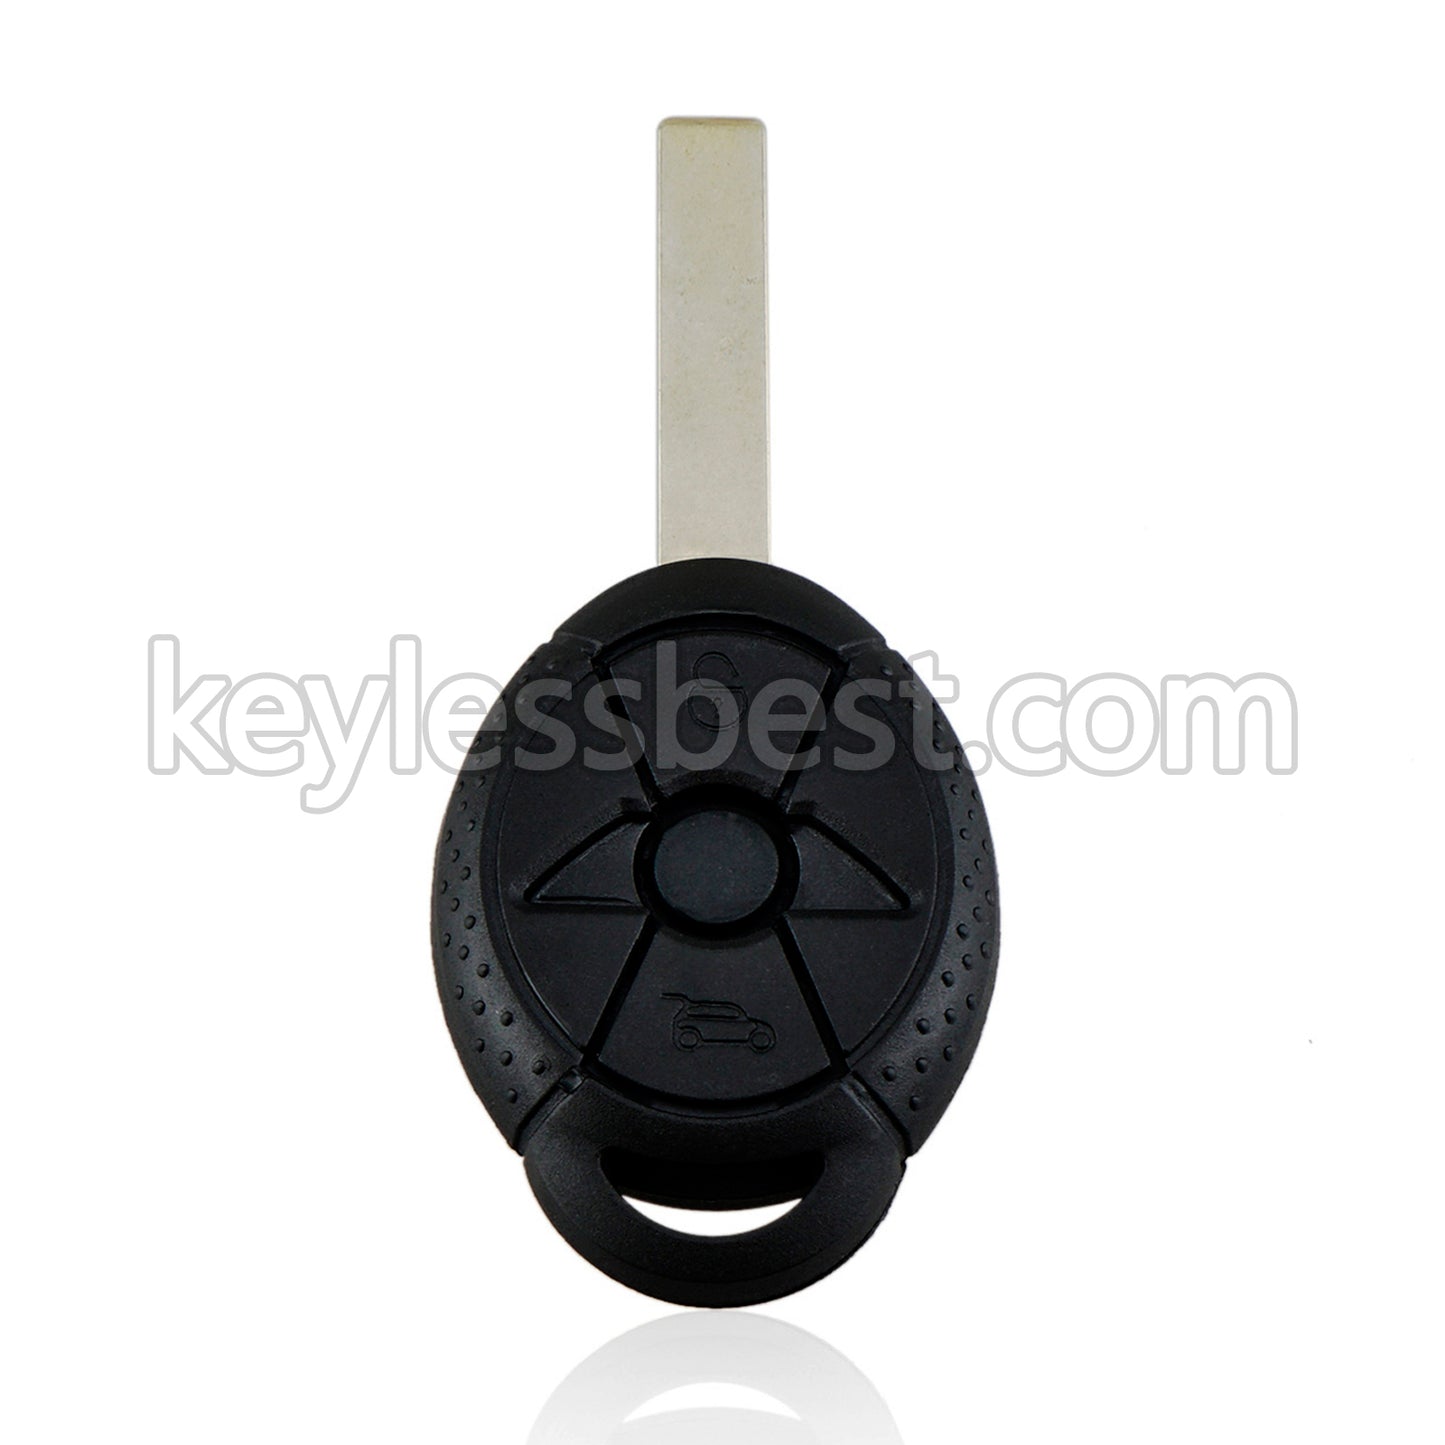 2005 - 2007 Mini Cooper S EWS systems / 3 Buttons Remote Key / LX8F2V / 315MHz